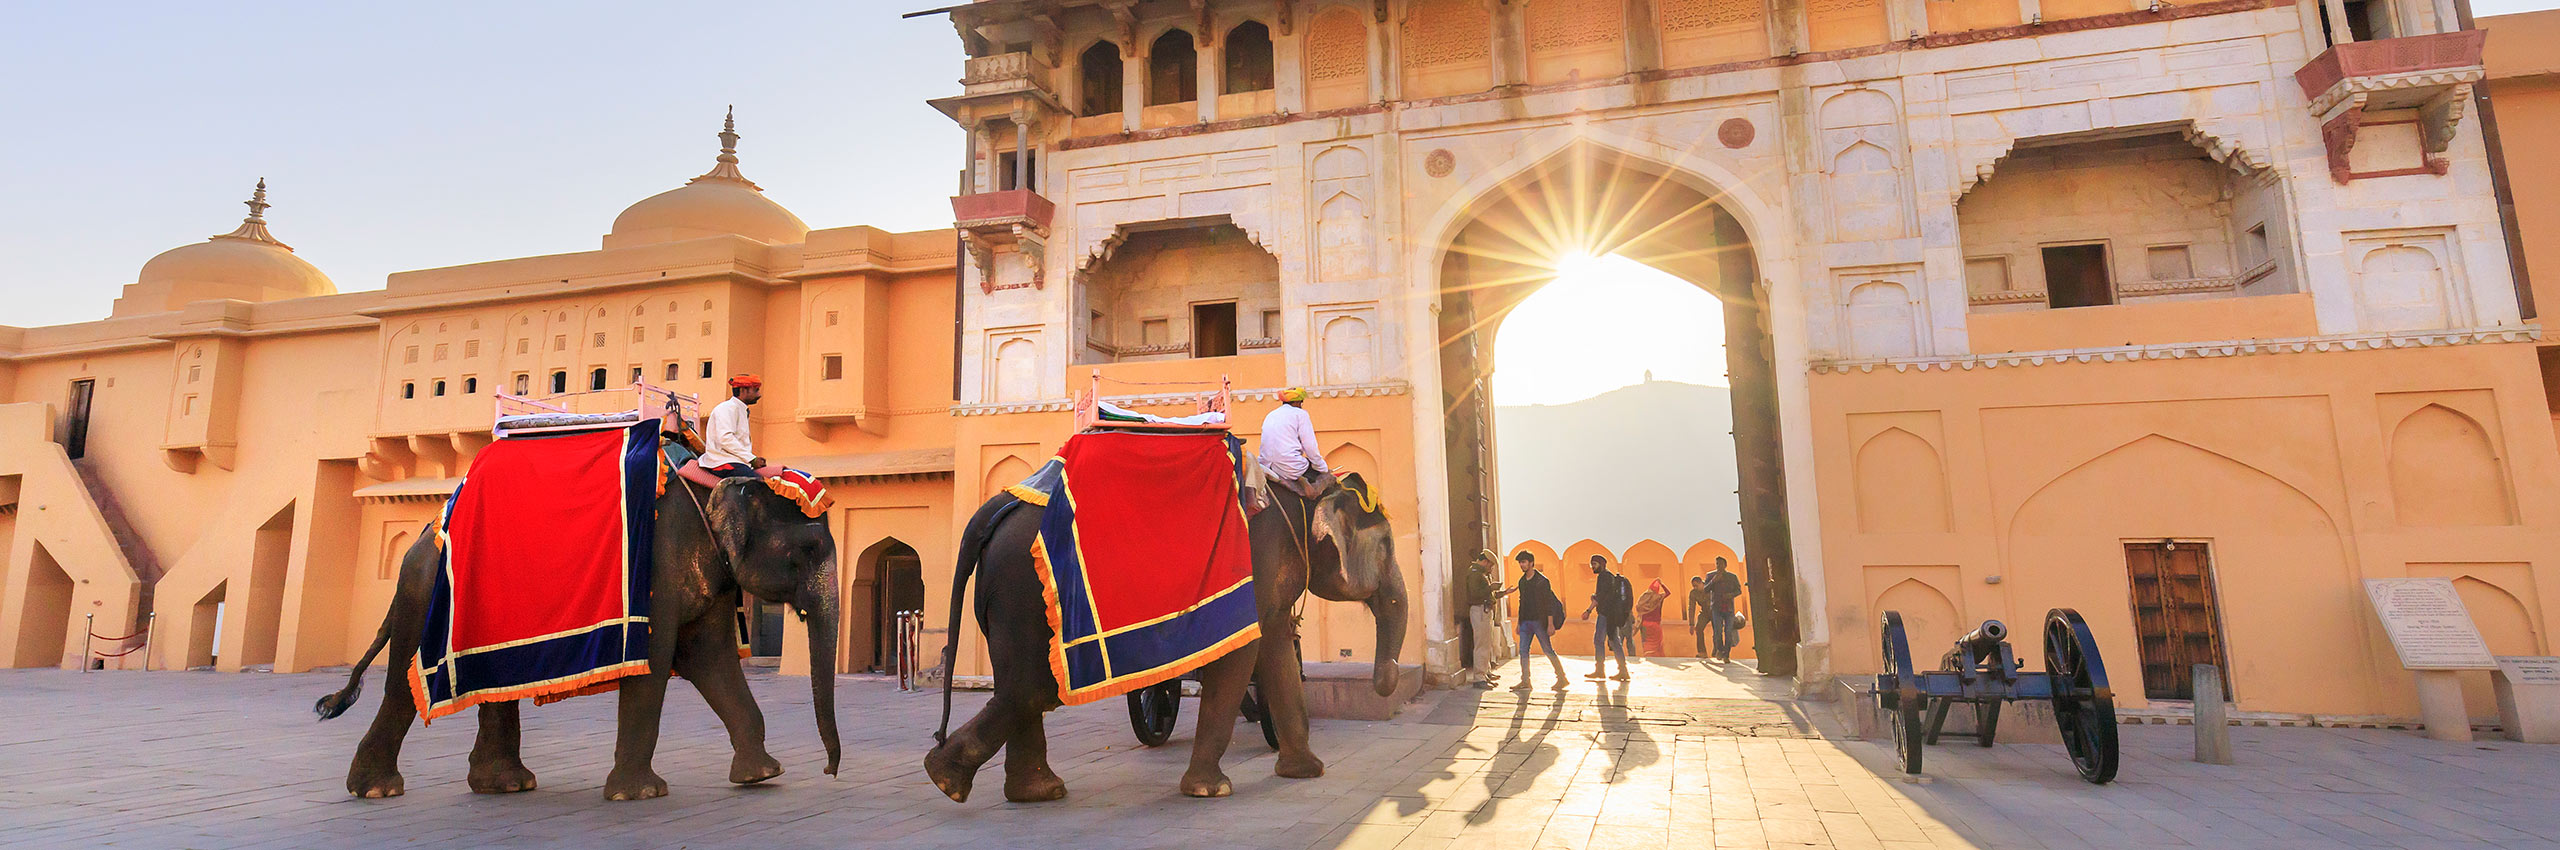 SIM-502860 | India/Rajasthan, Jaipur, Amber | © Maurizio Rellini/4Corners